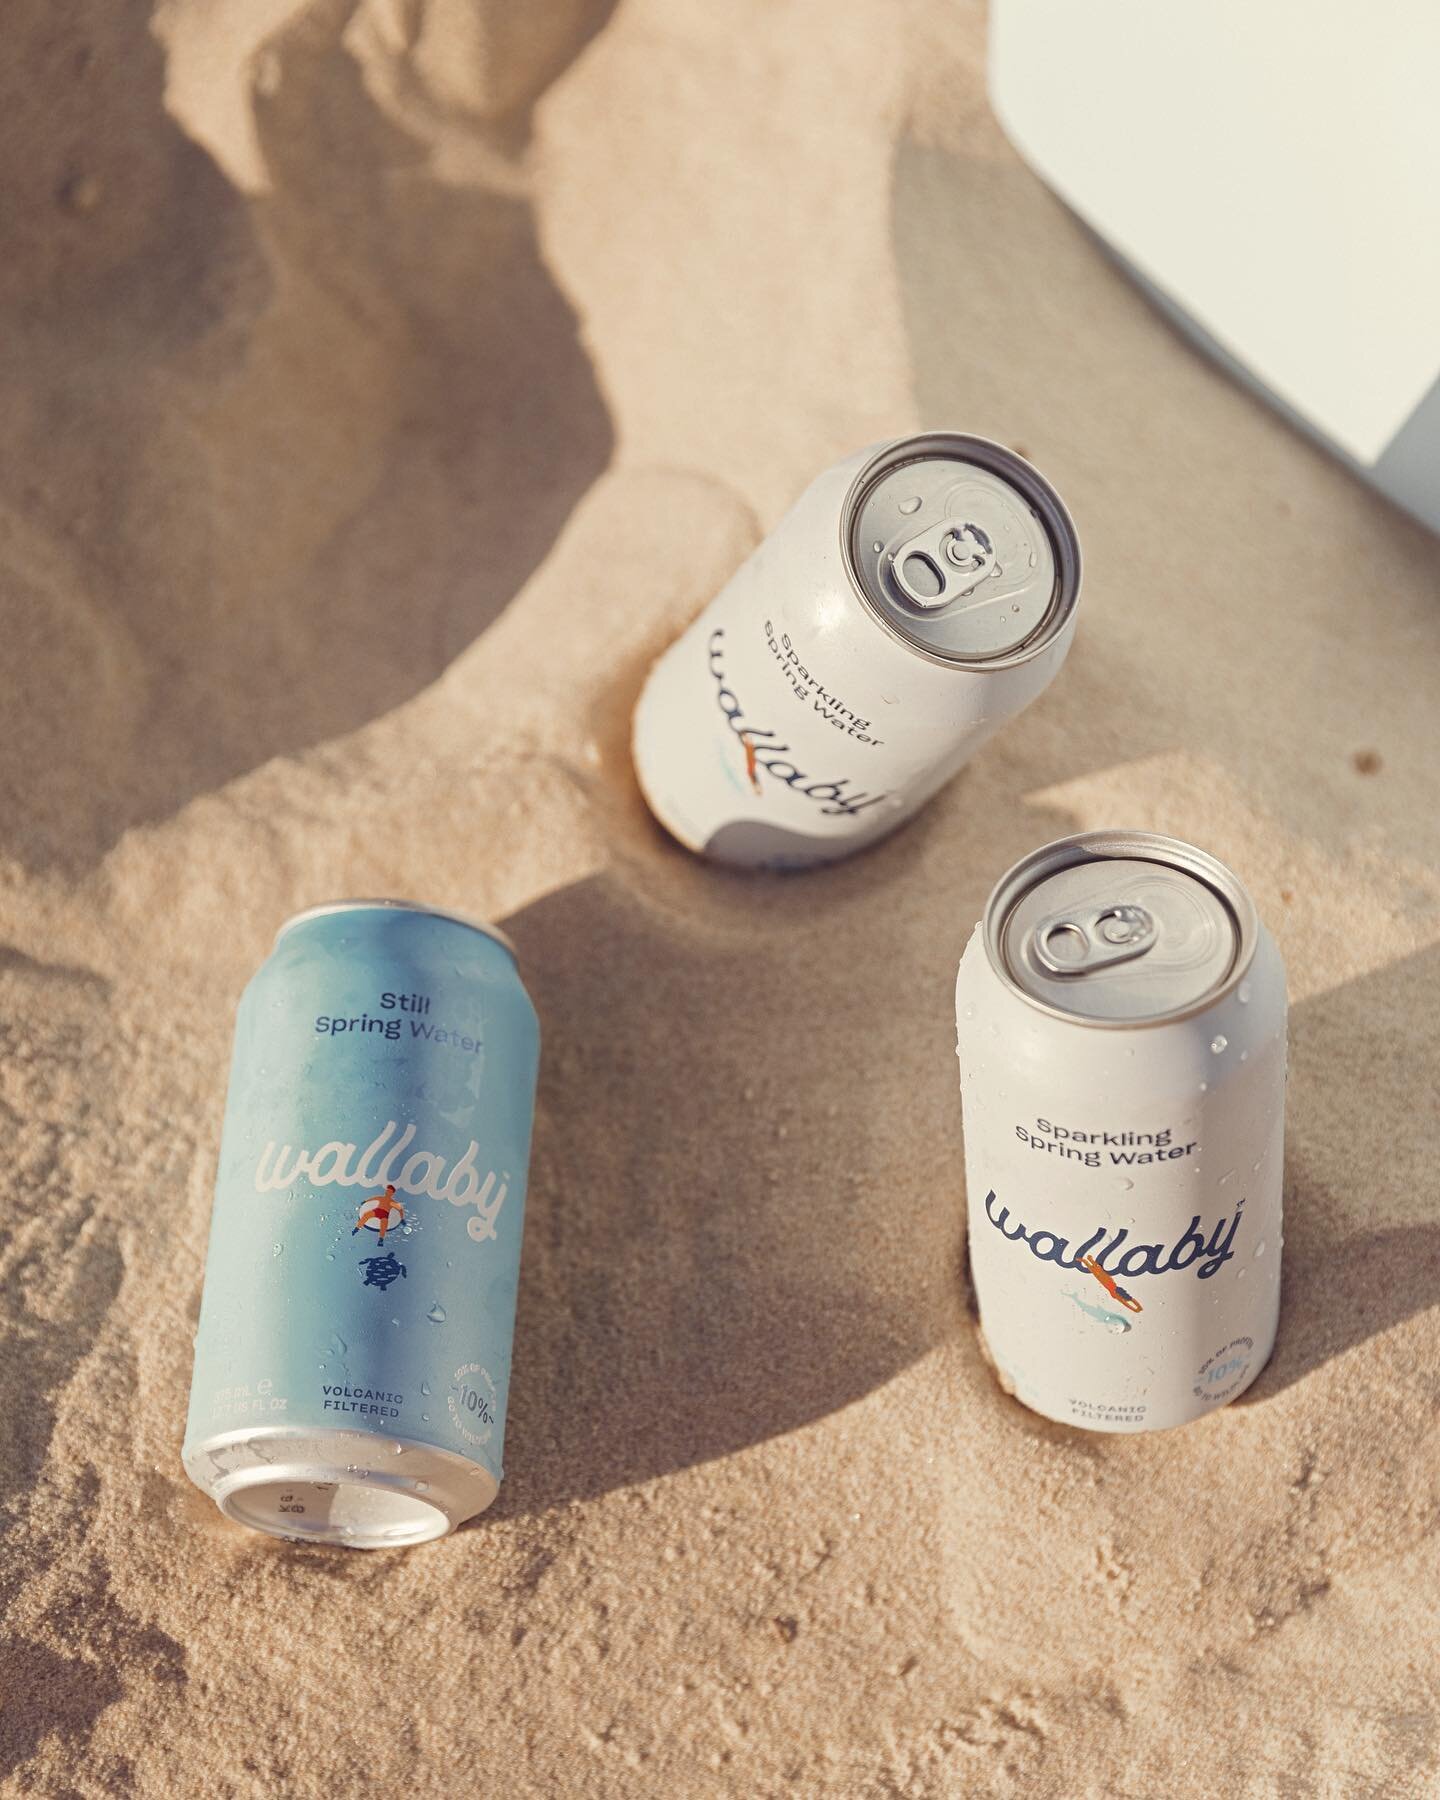 Hot sand; cold drinks 👌🏼⛱️

#beachday #surfsandsun